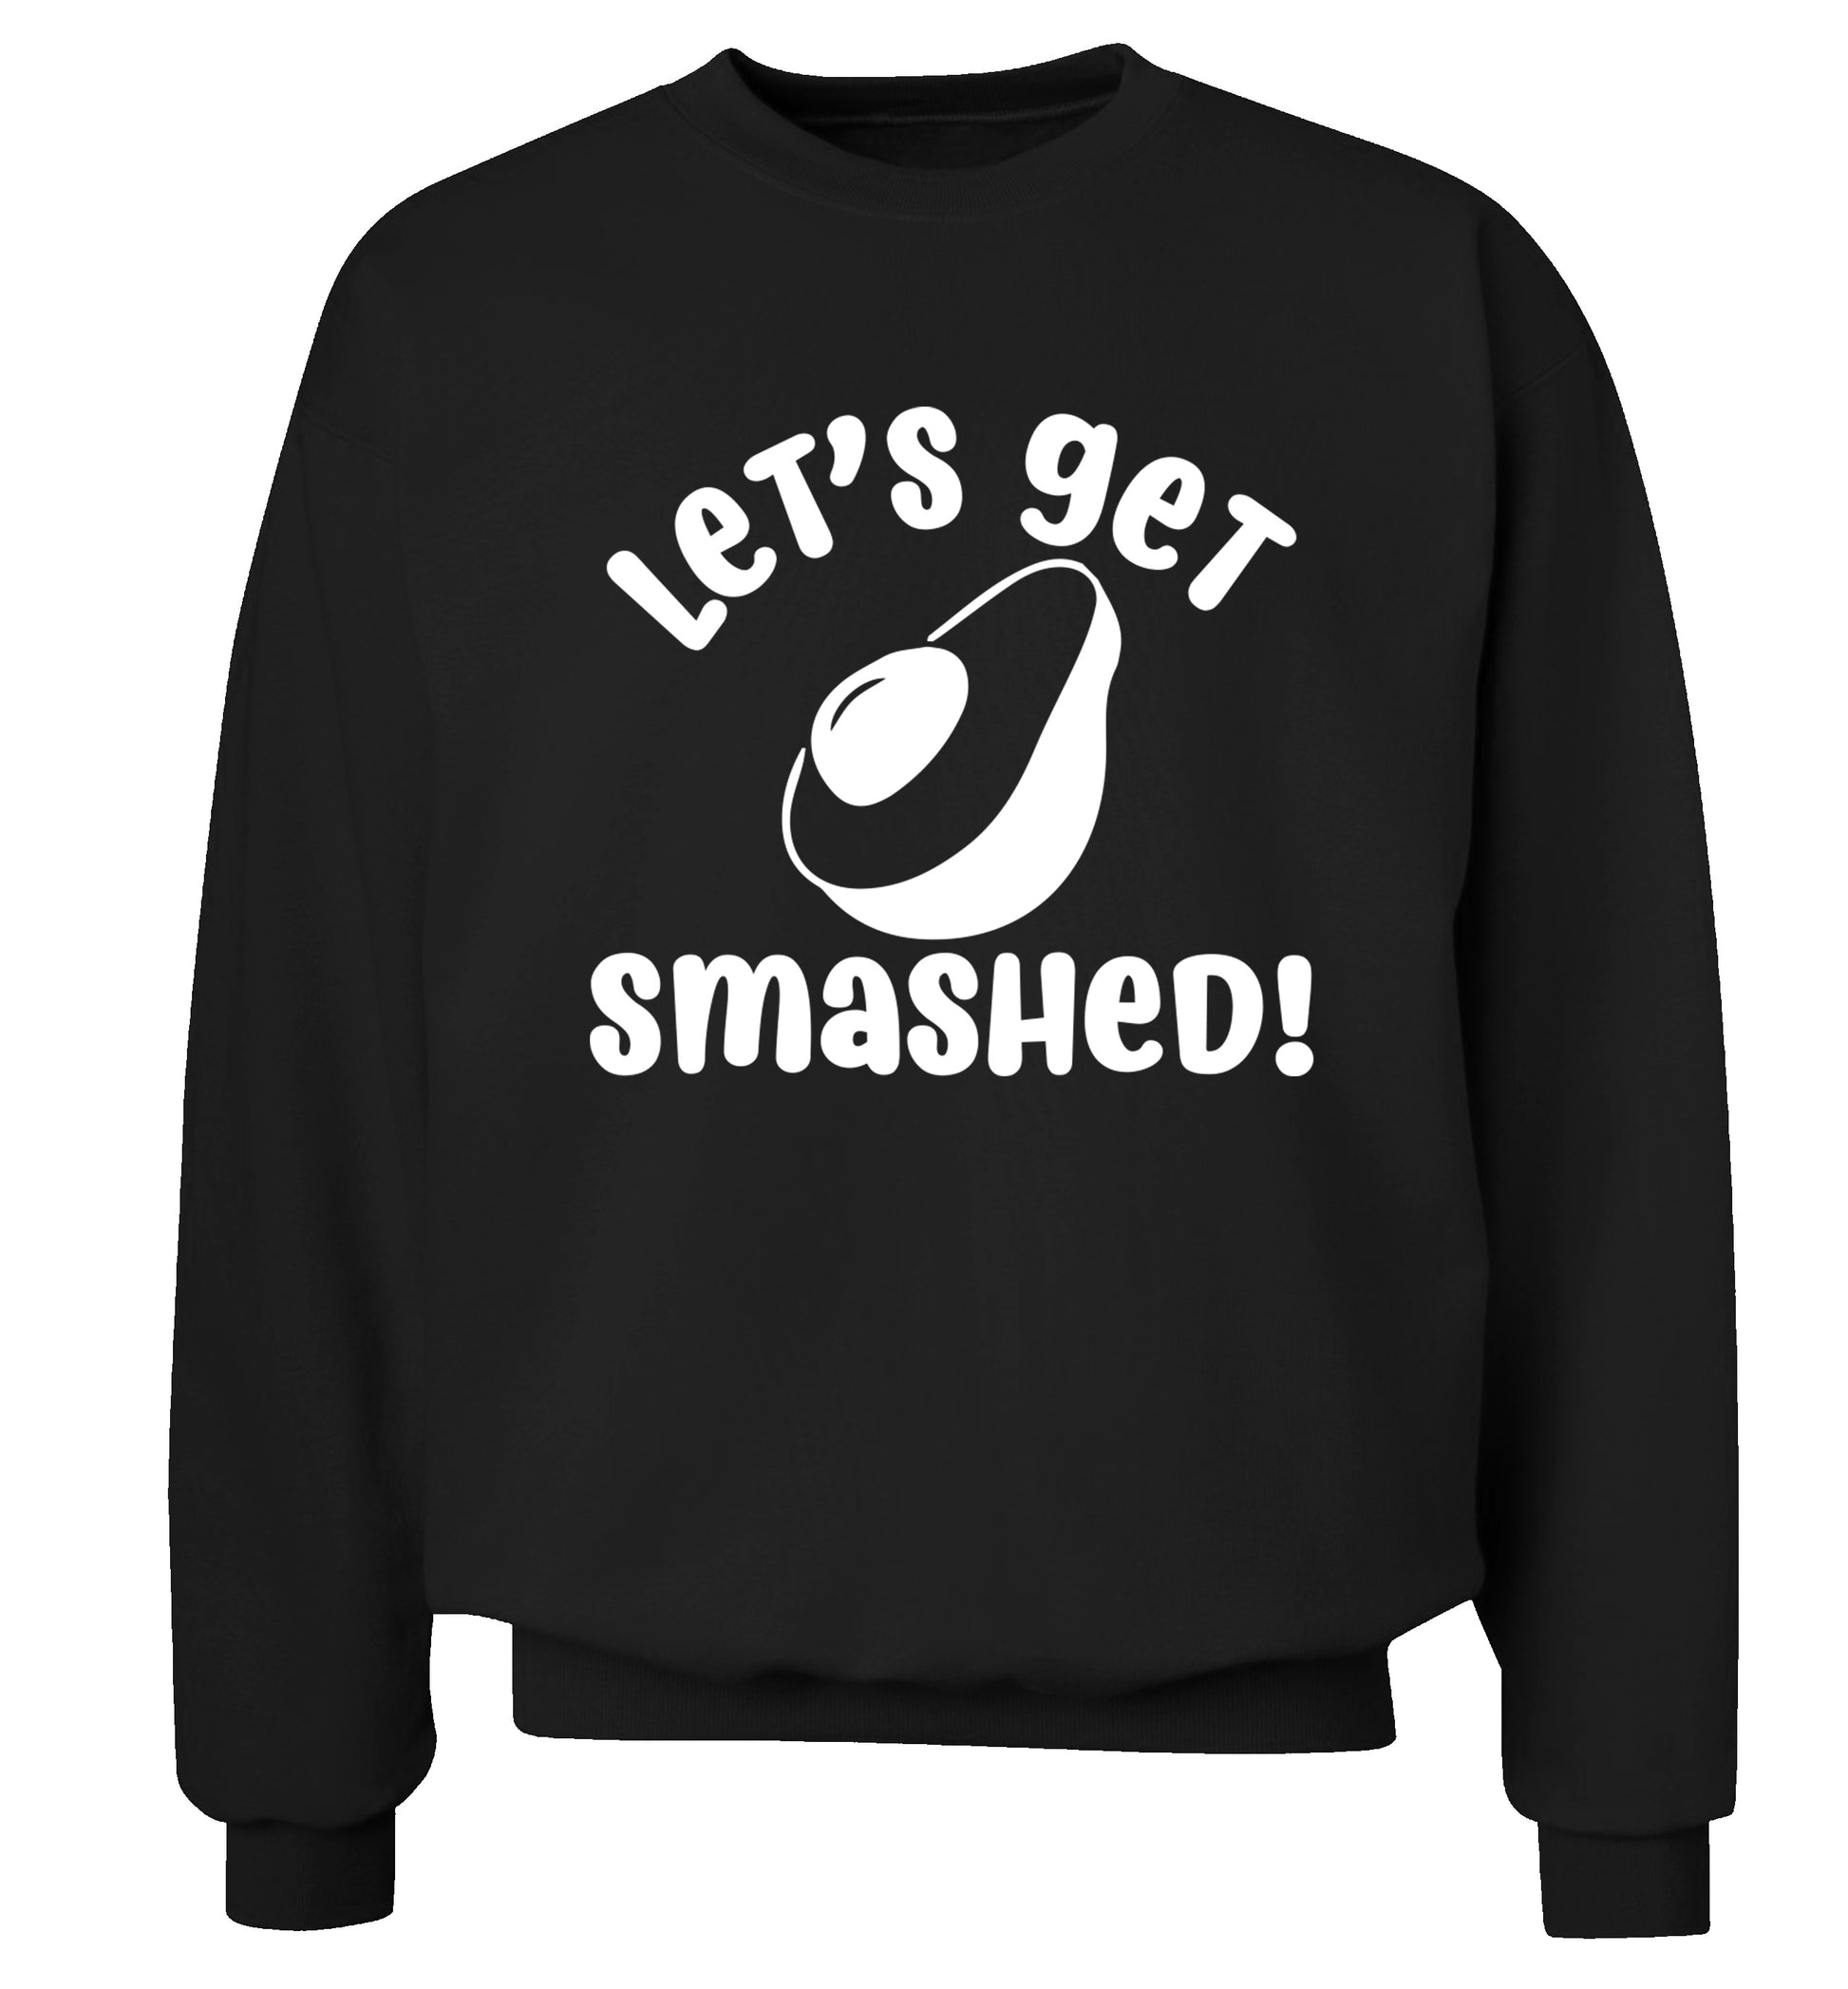 Let's get smashed Adult's unisex black Sweater 2XL